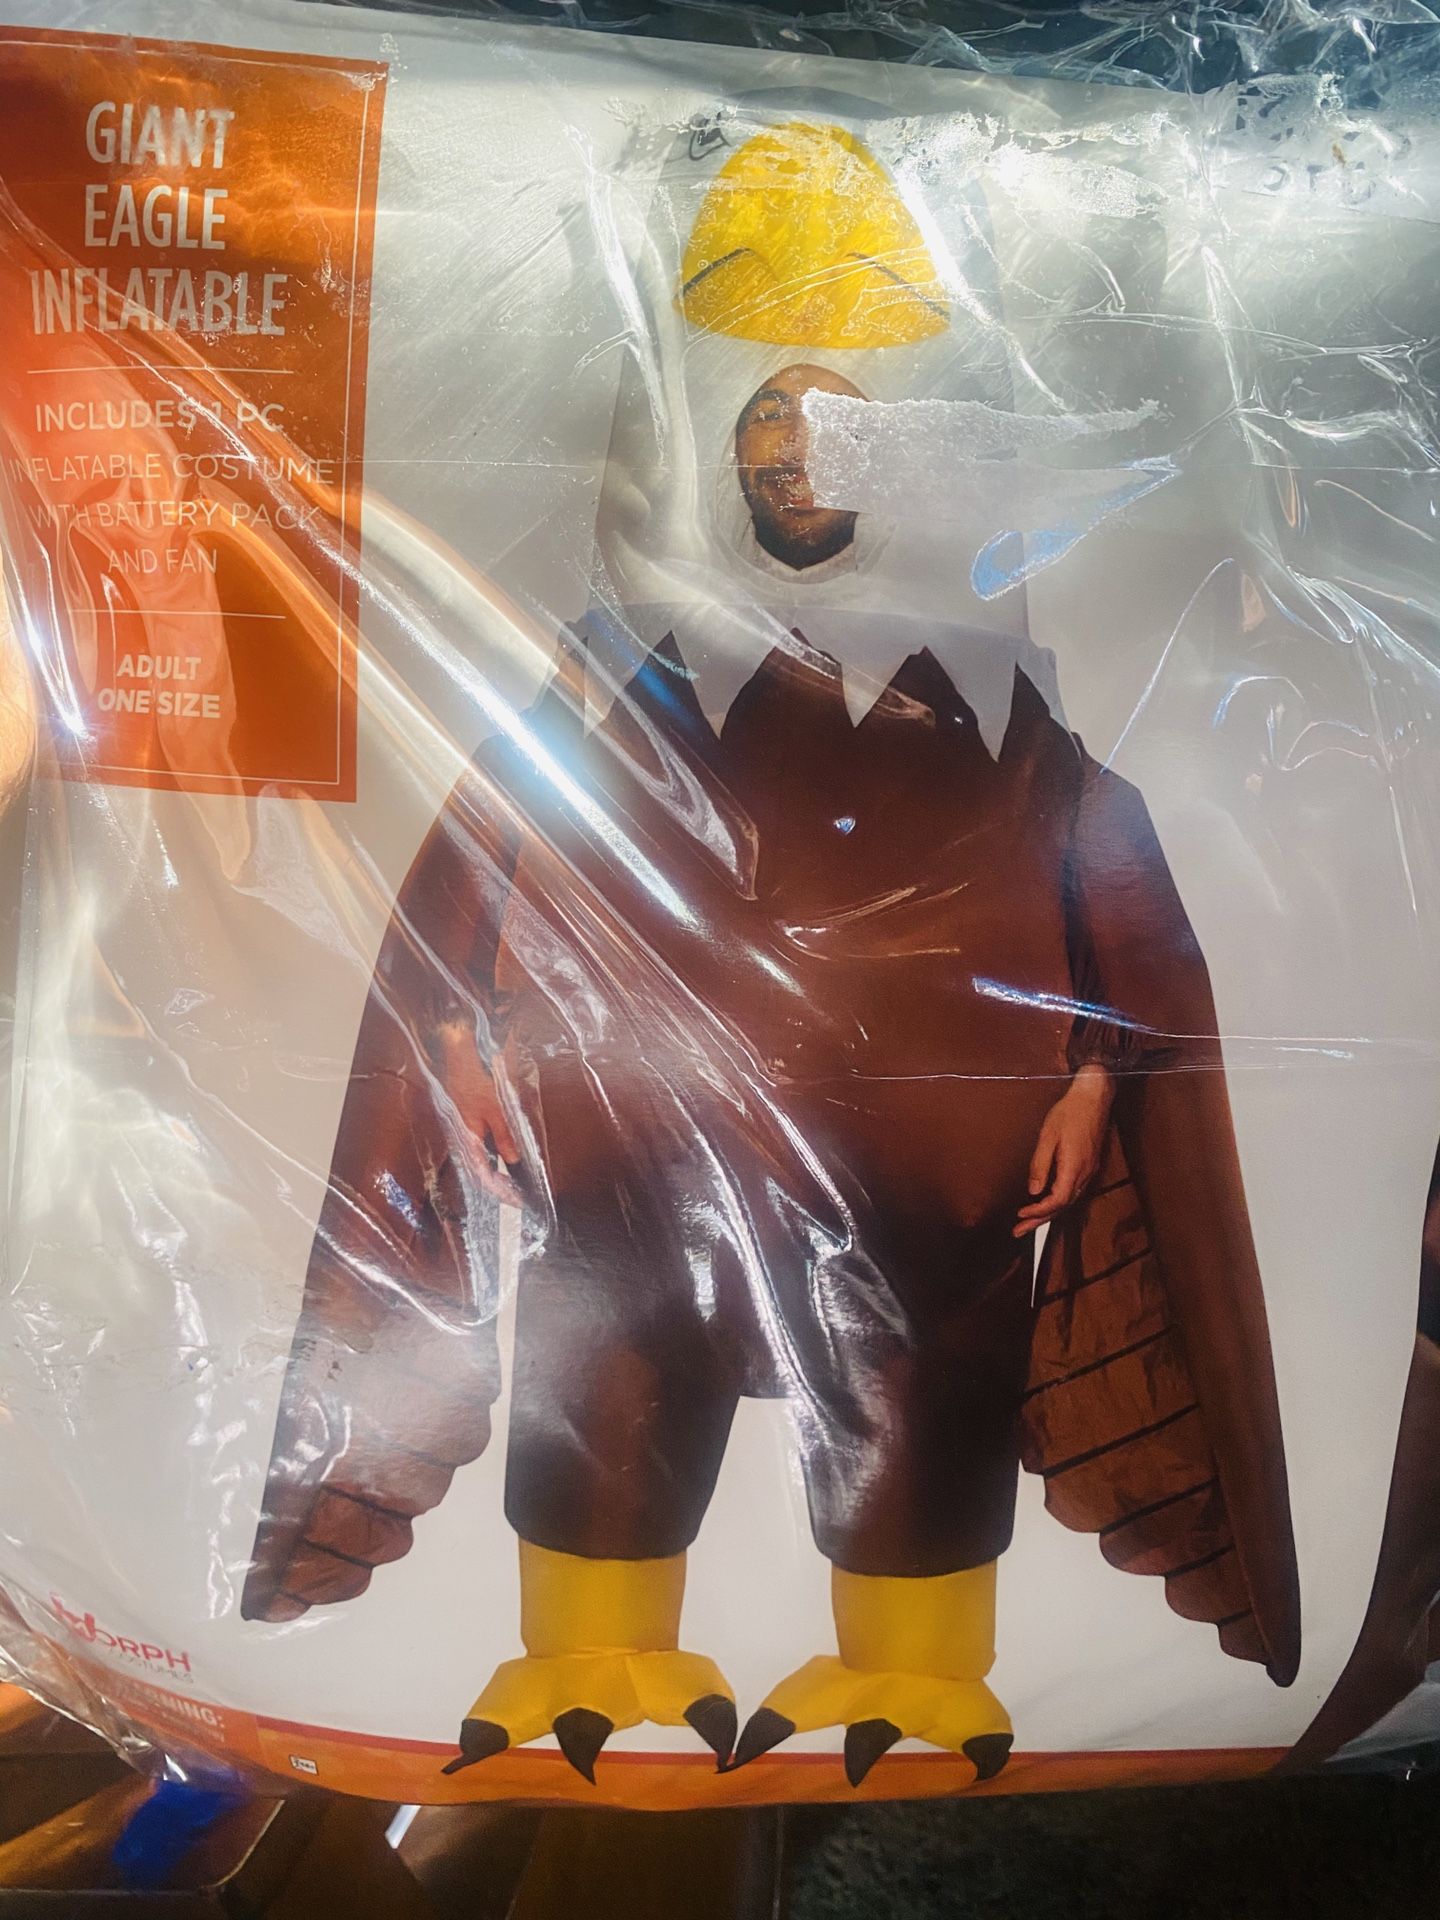 Bald Eagle inflatable